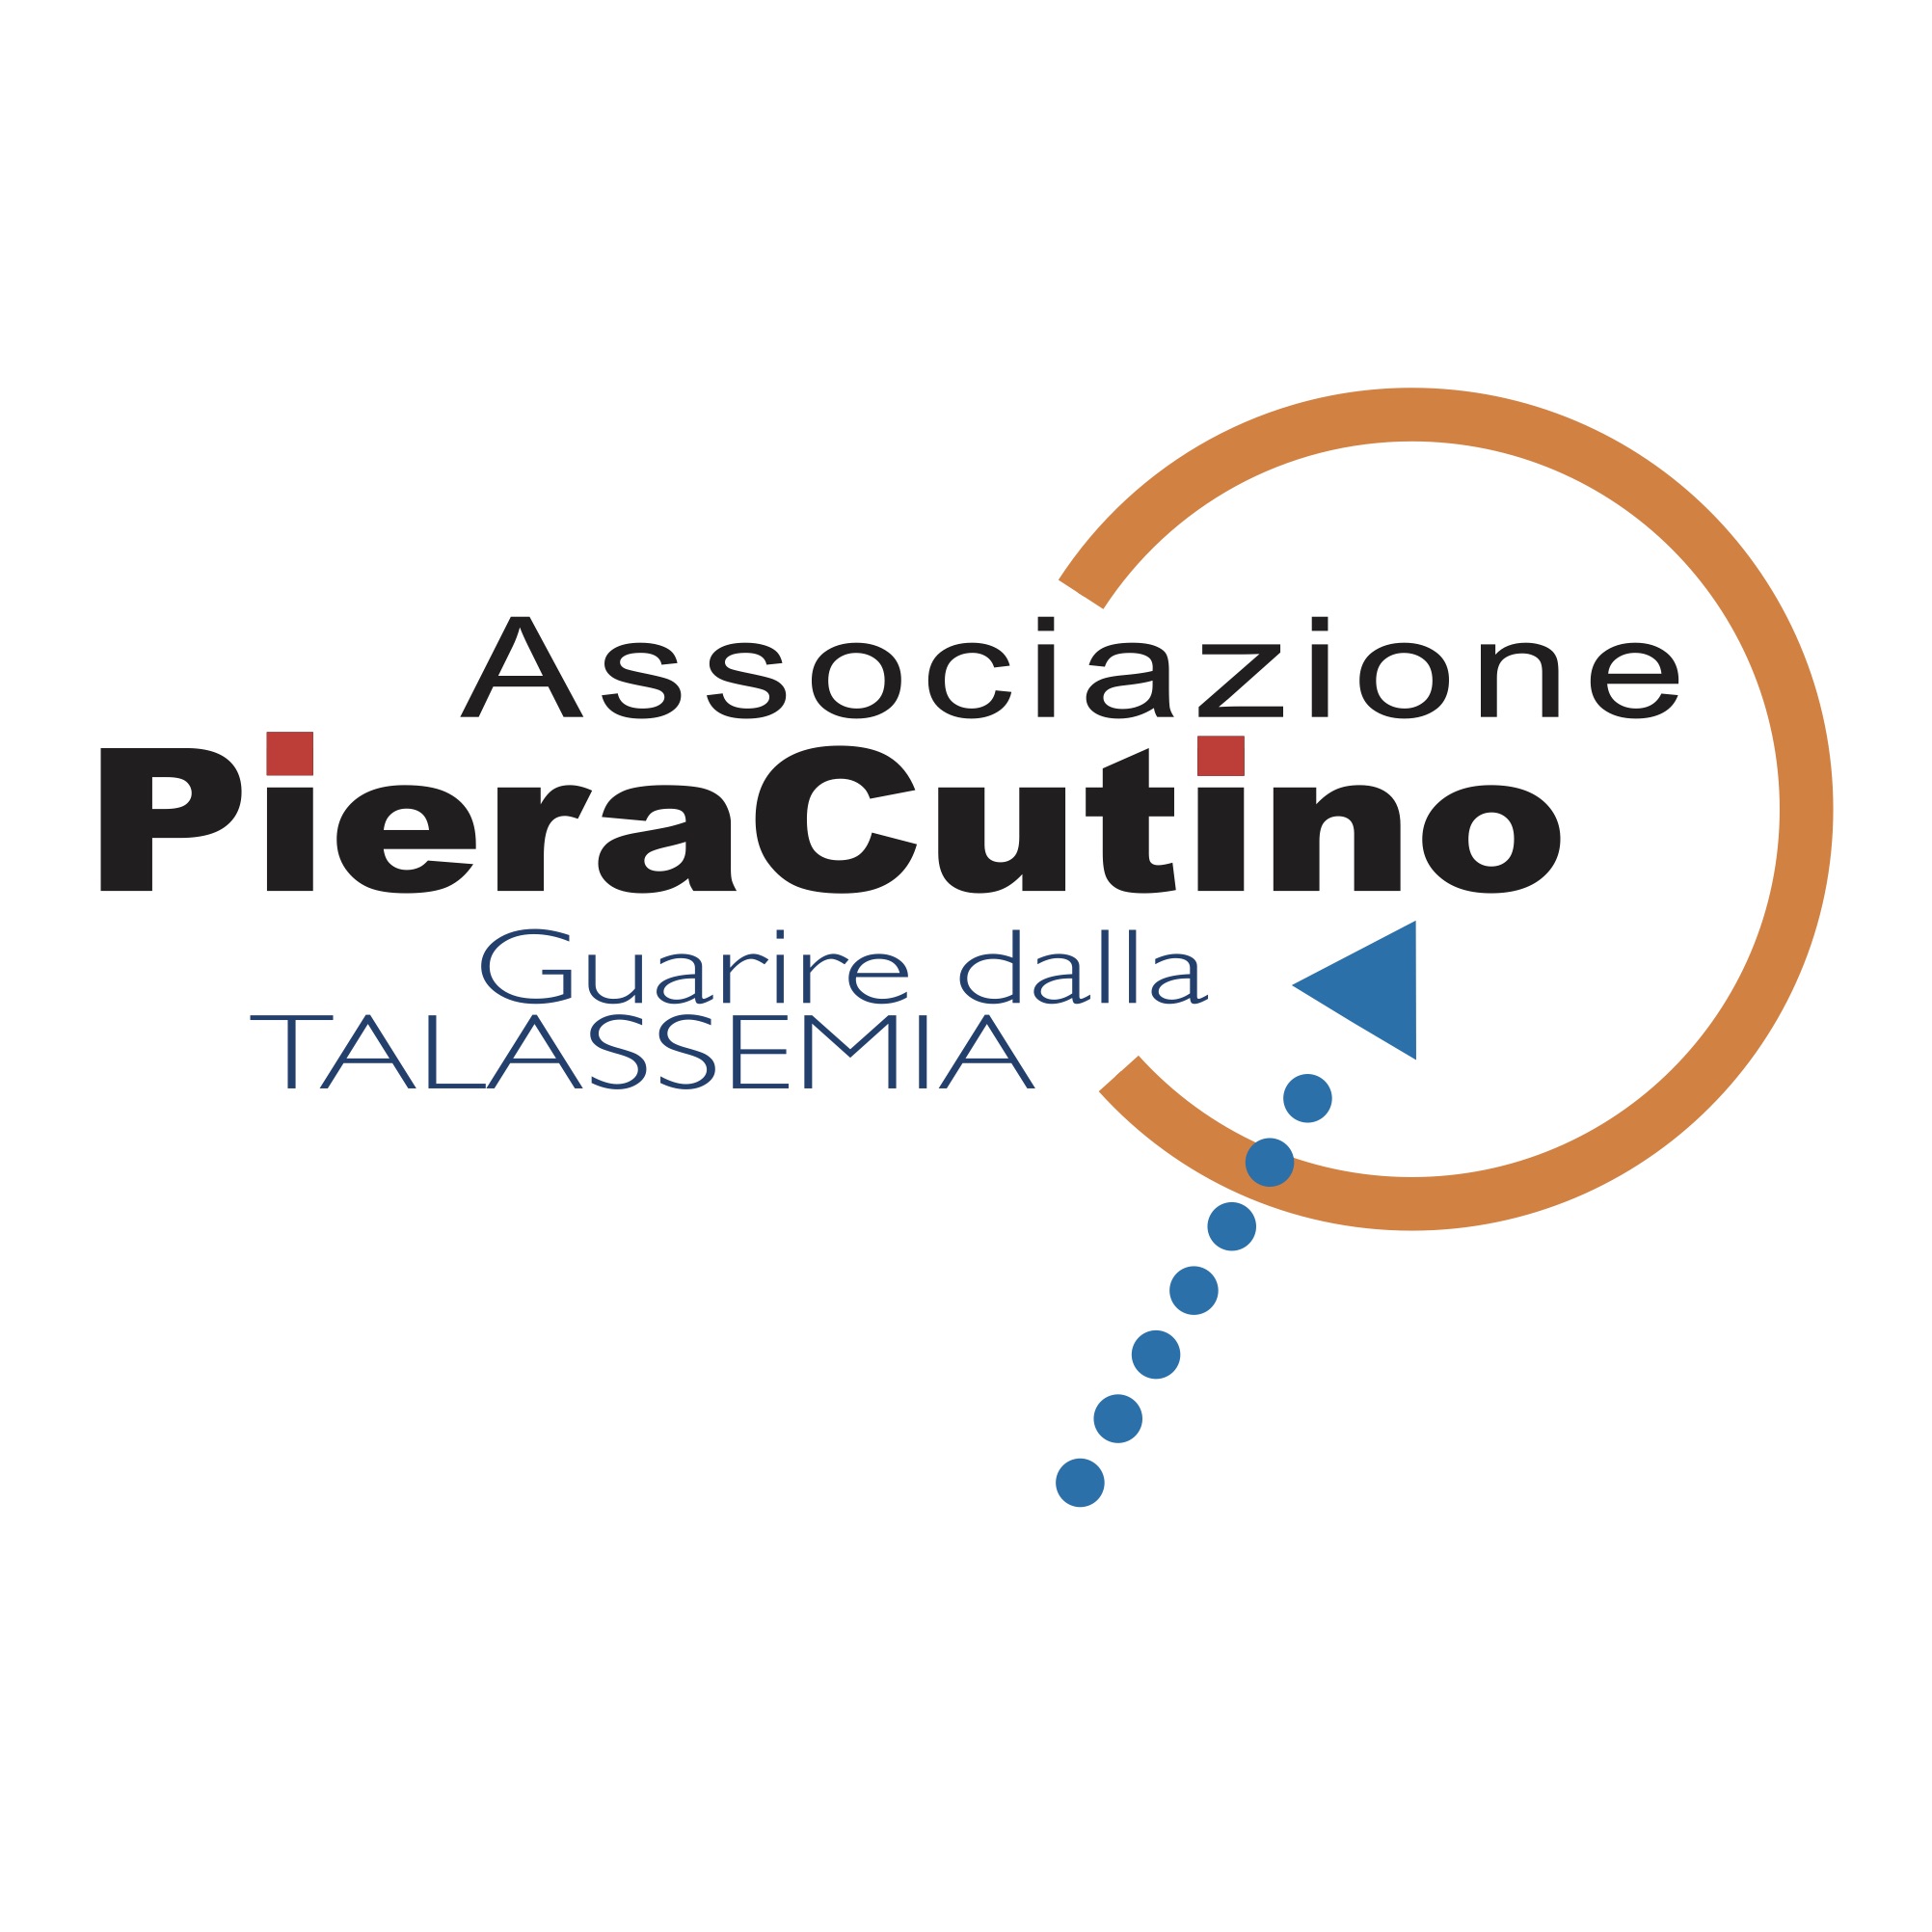 (c) Pieracutino.it